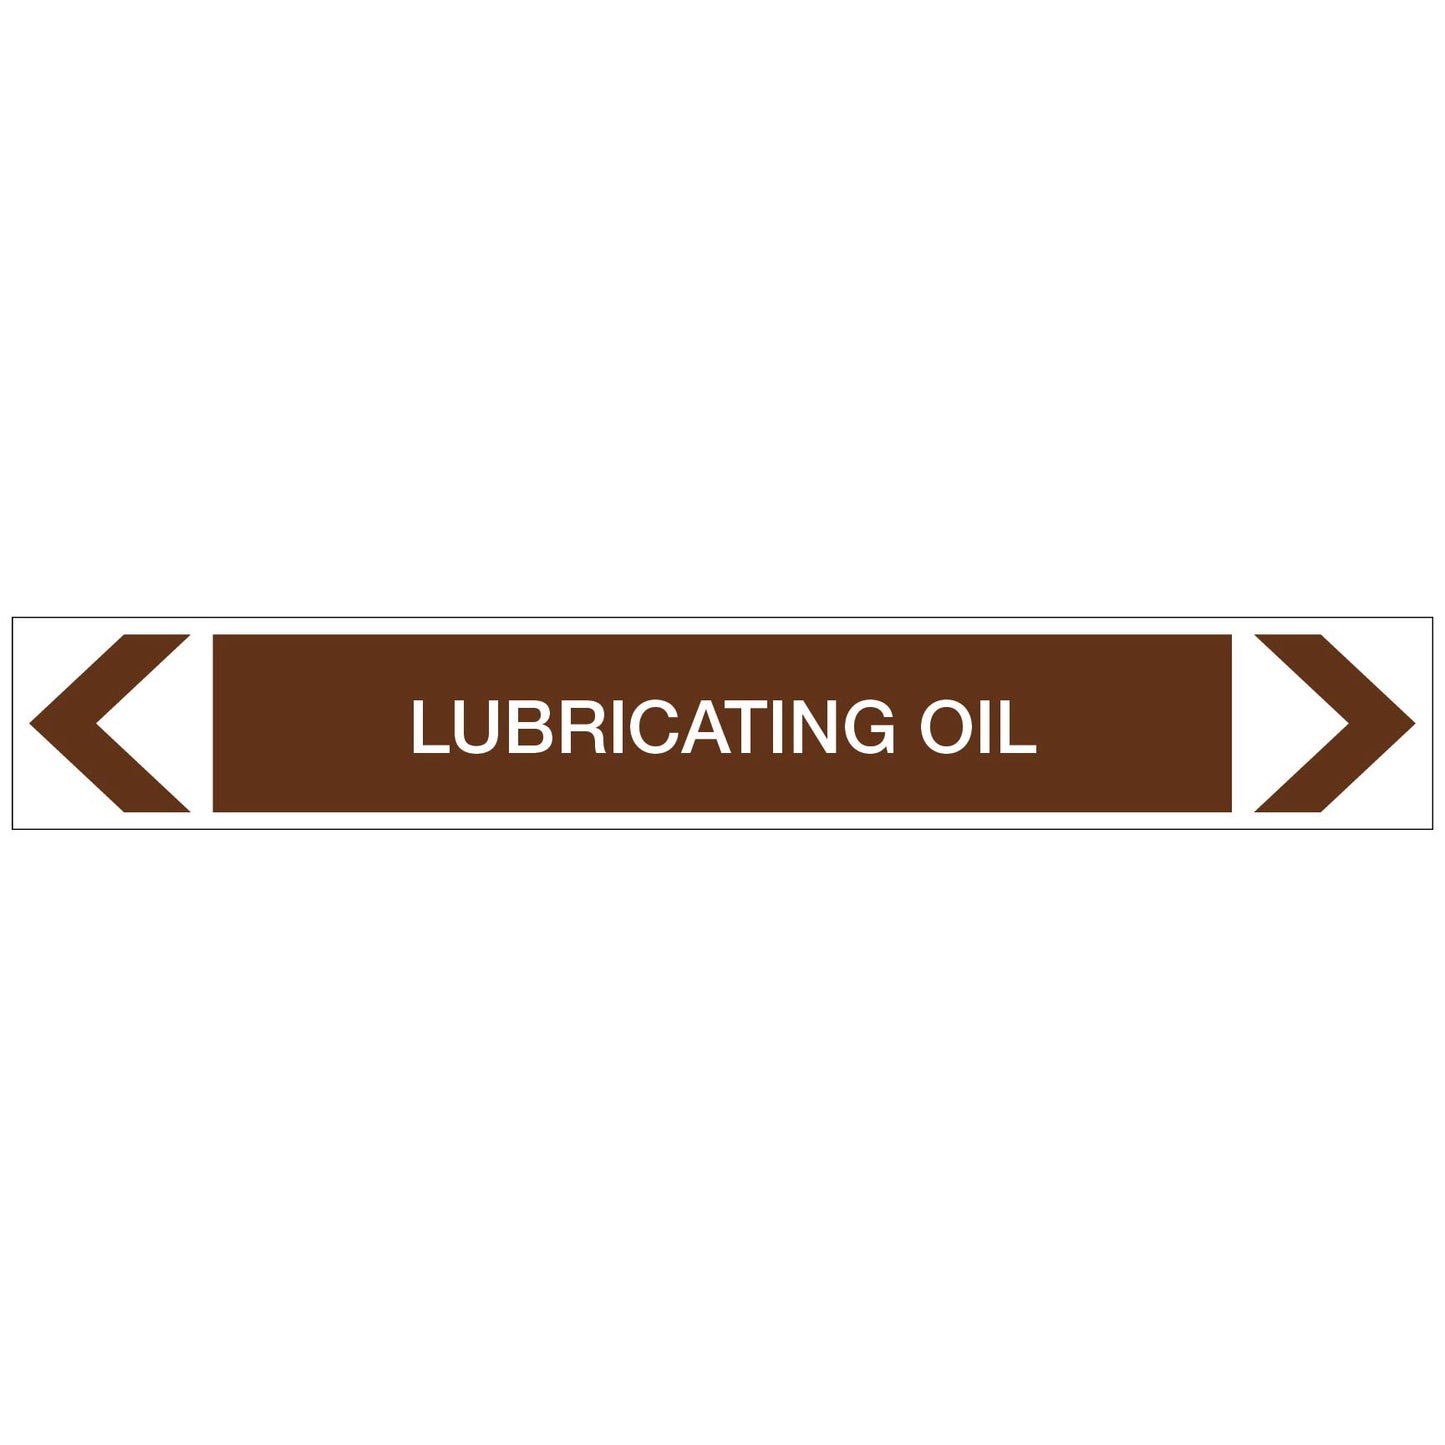 Oils - Lubricating Oil - Pipe Marker Sticker